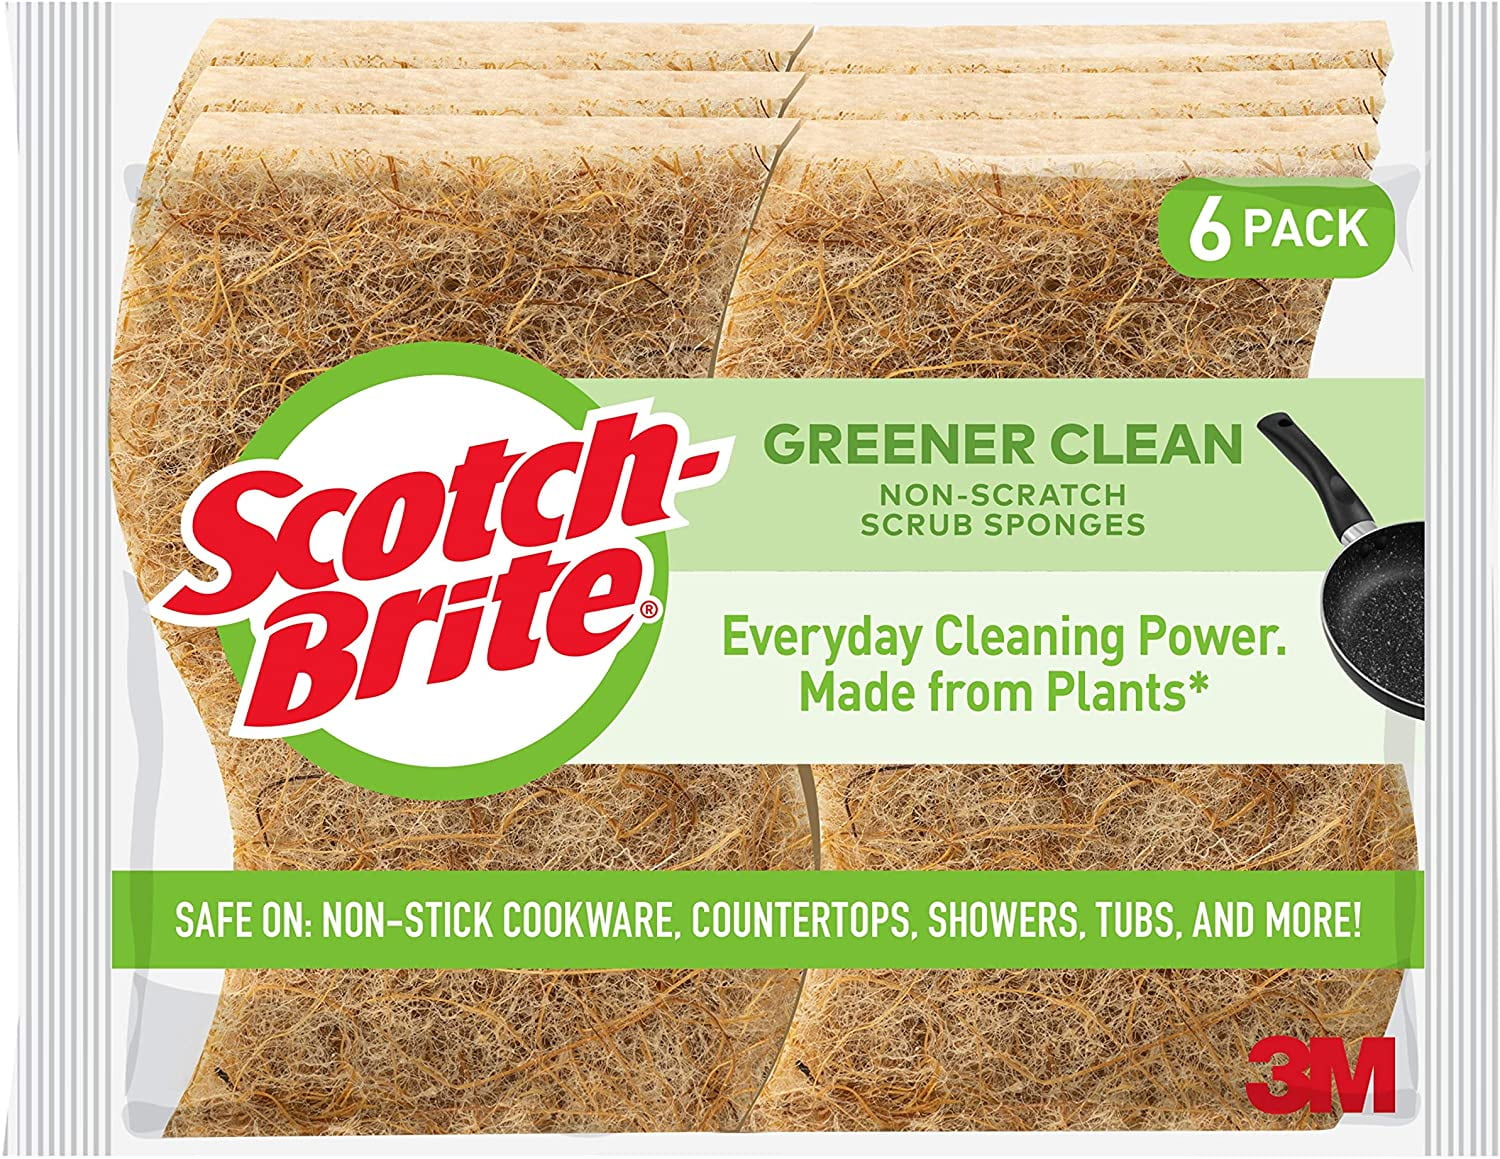 Scotch-Brite Greener Clean Non-Scratch Scrub Sponges Made from Plants Cleans ... 